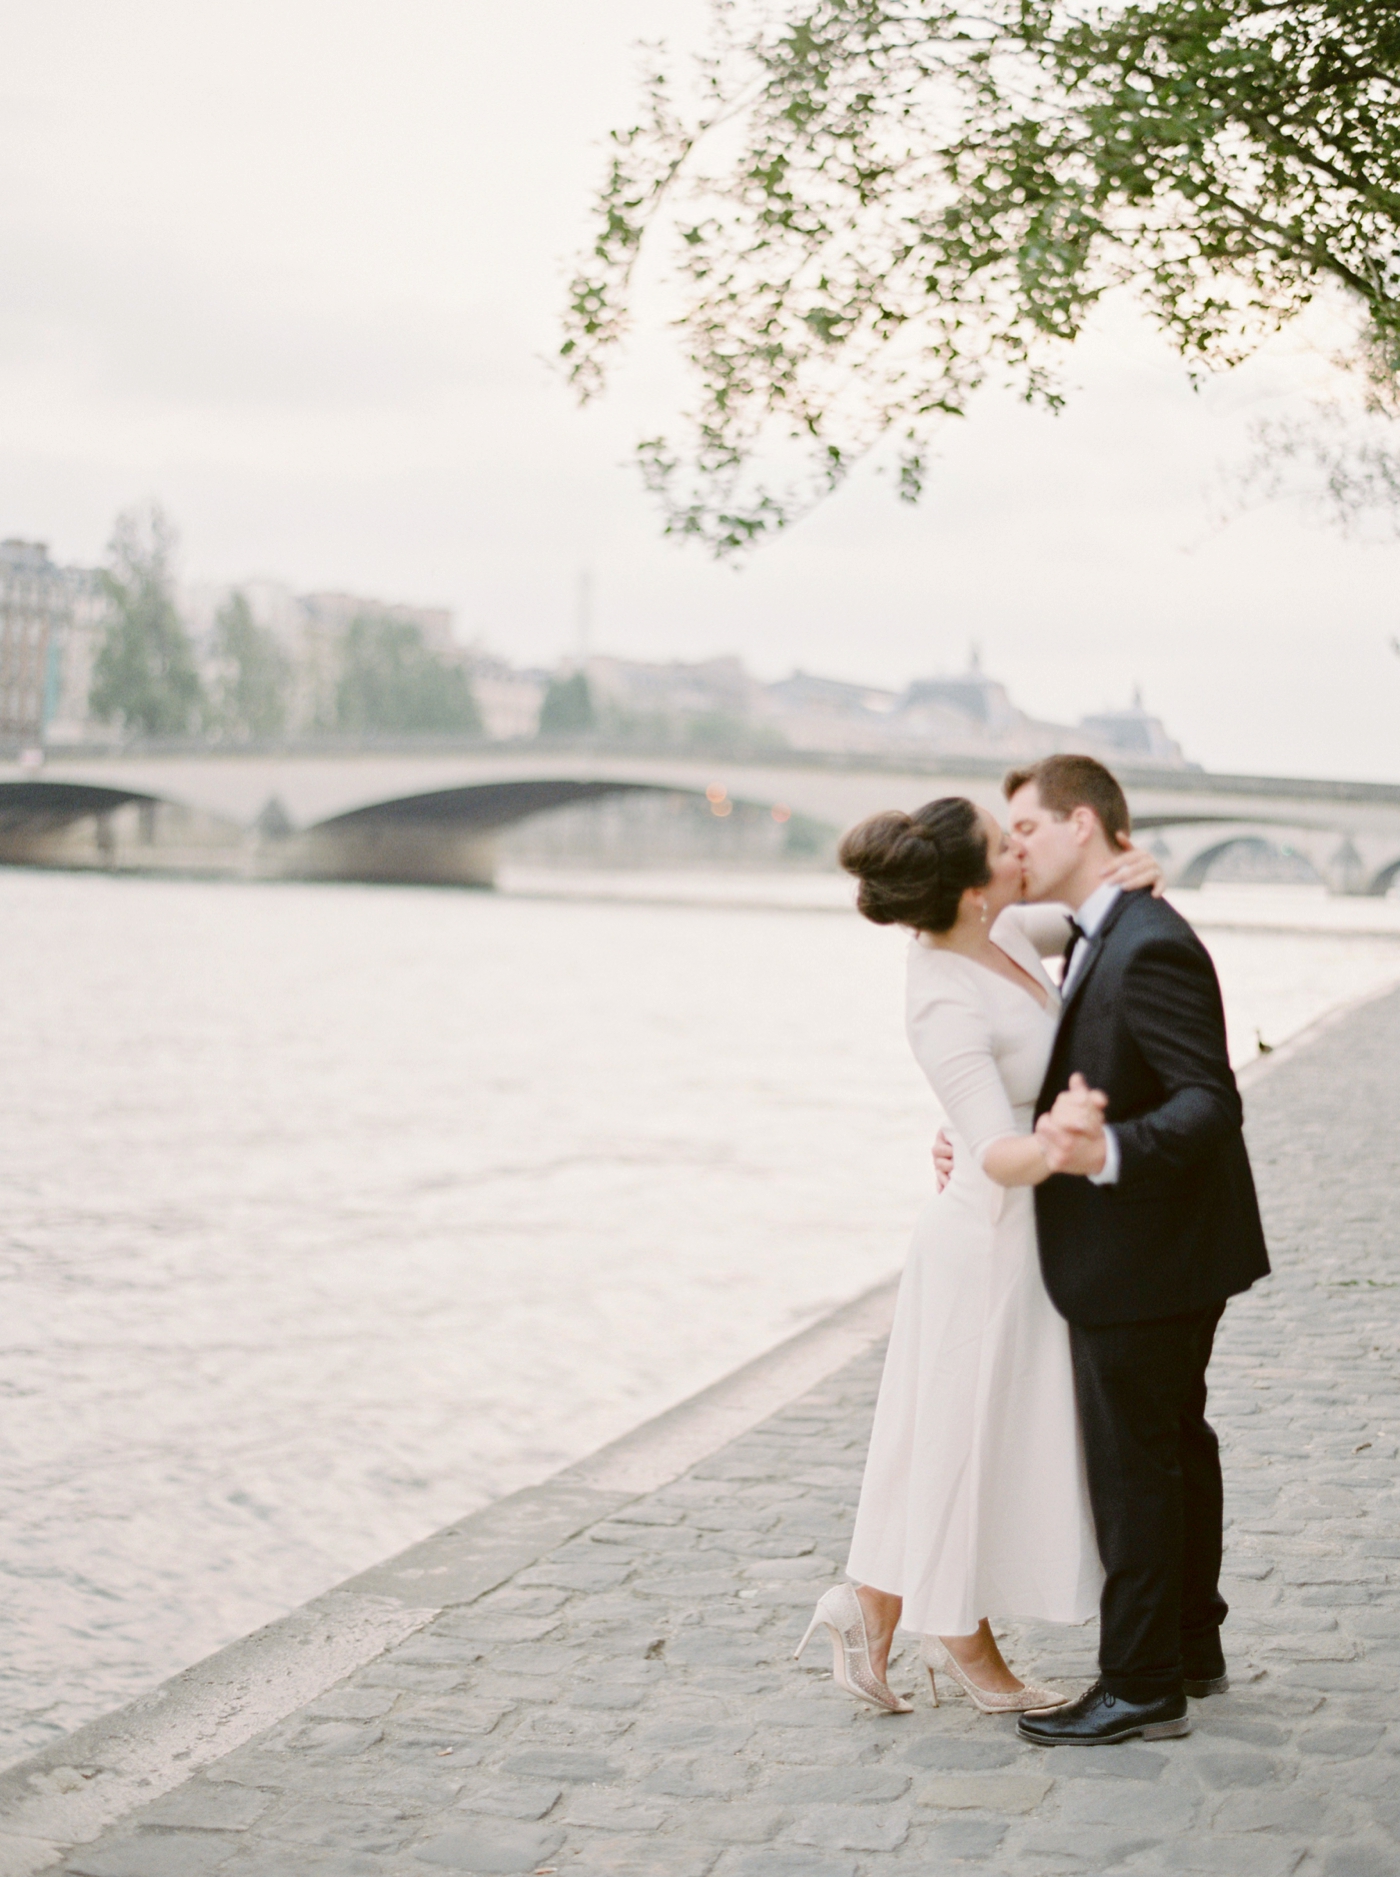 Paris weding photographers | pre wedding engagement session | fine art film photographer justine milton